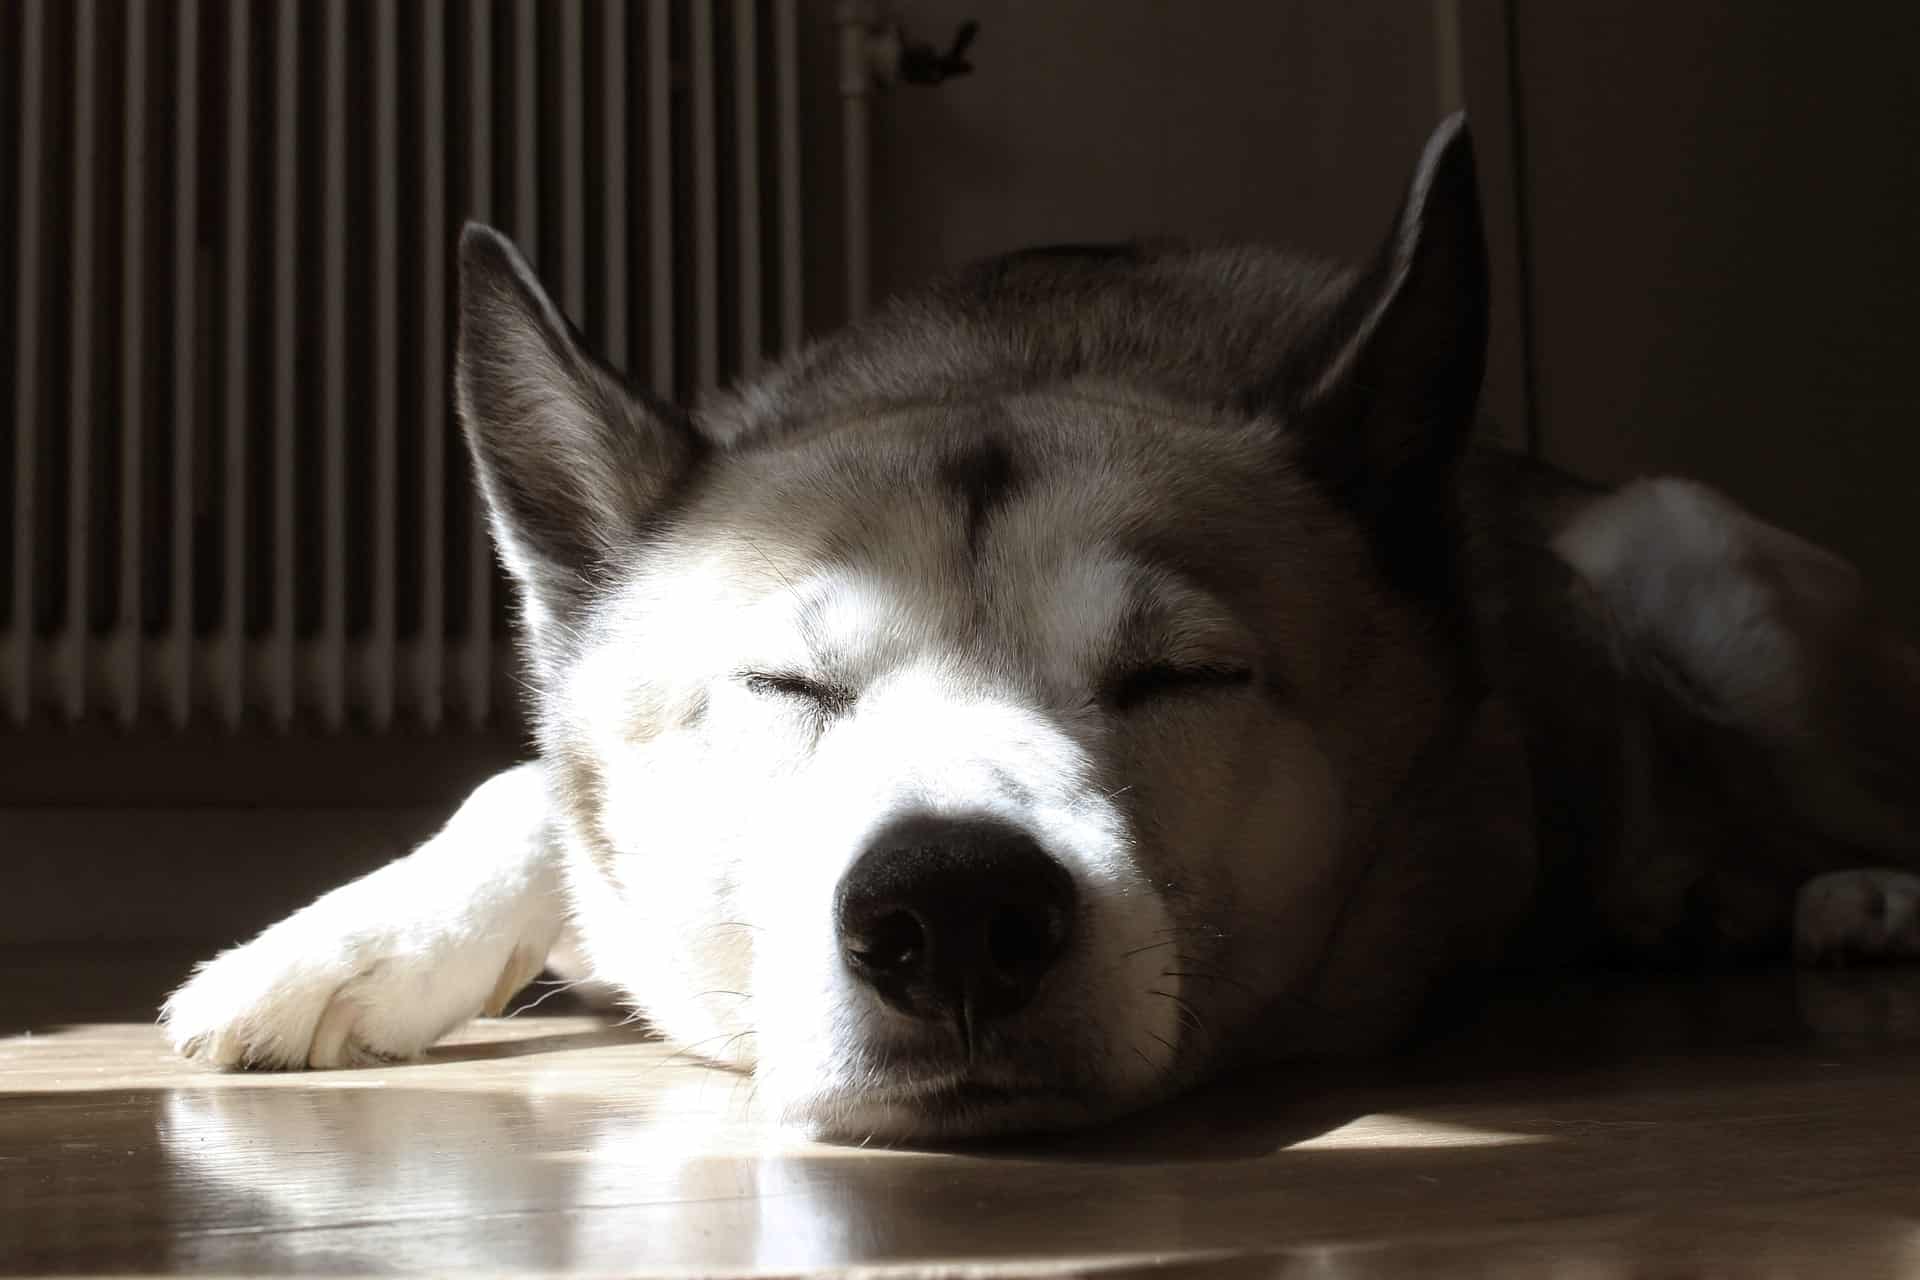 huskey sleep on floor